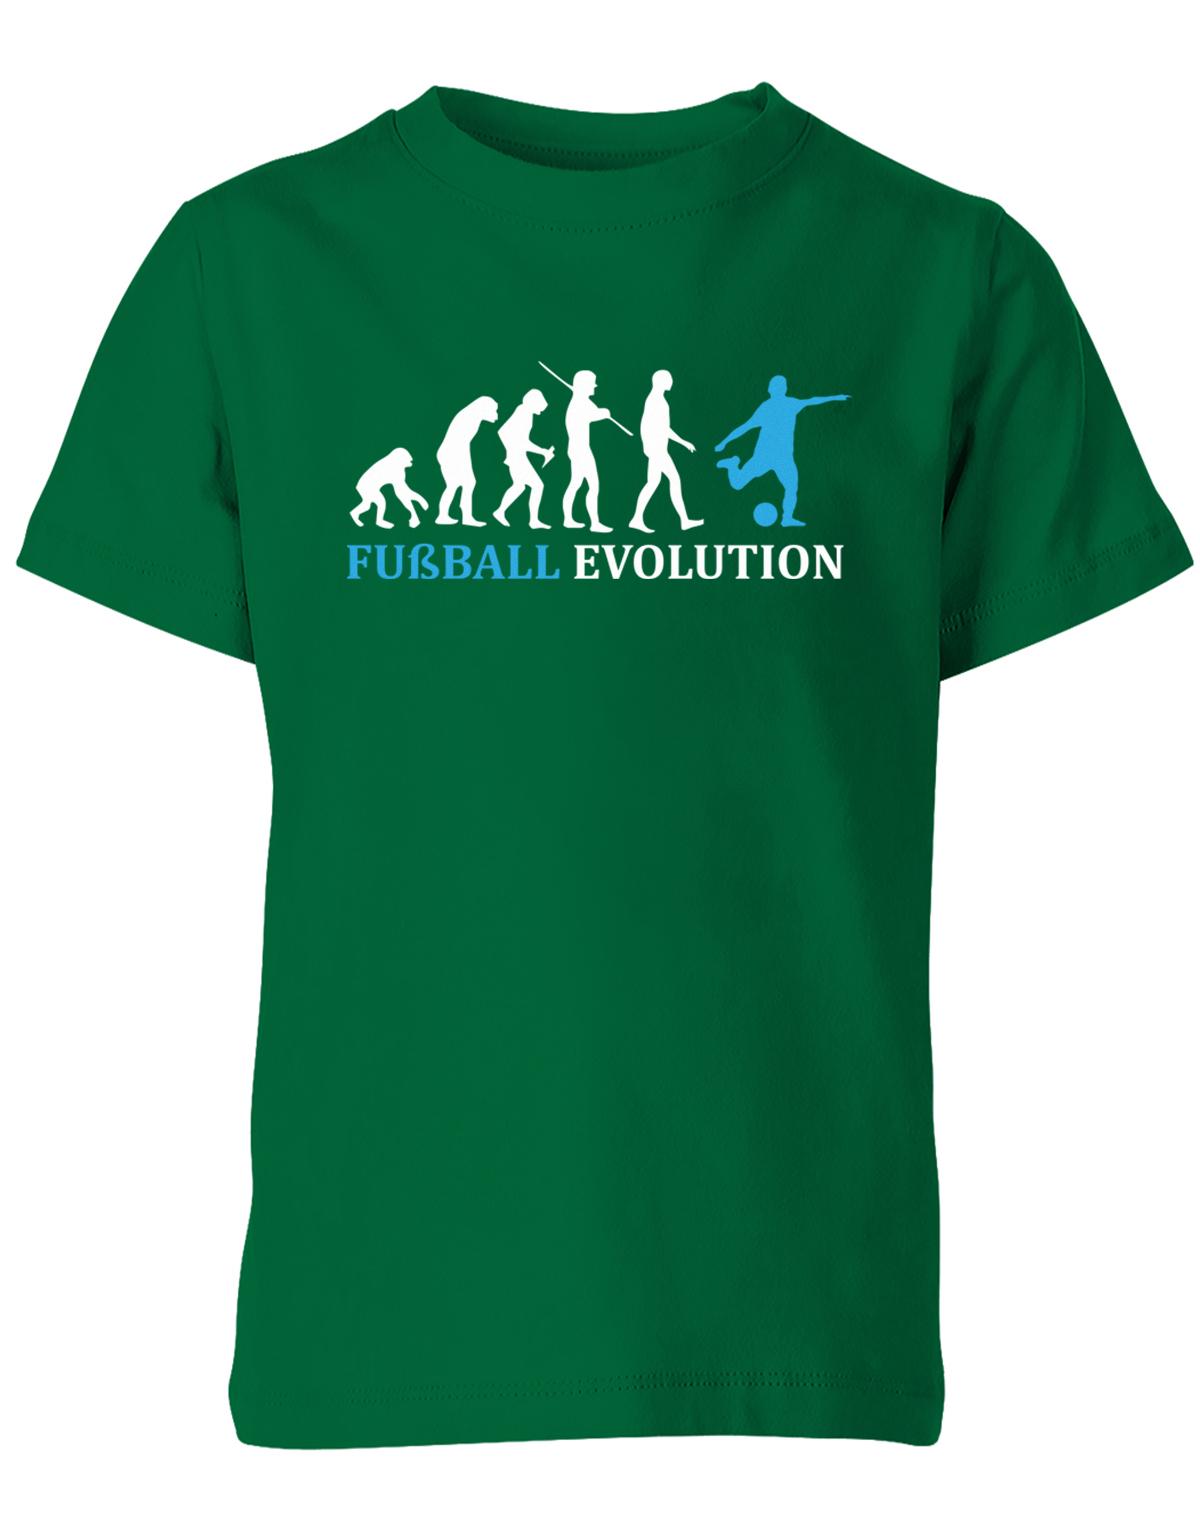 Fussball-Evolution-Kinder-Shirt-Gr-n-Hellblau